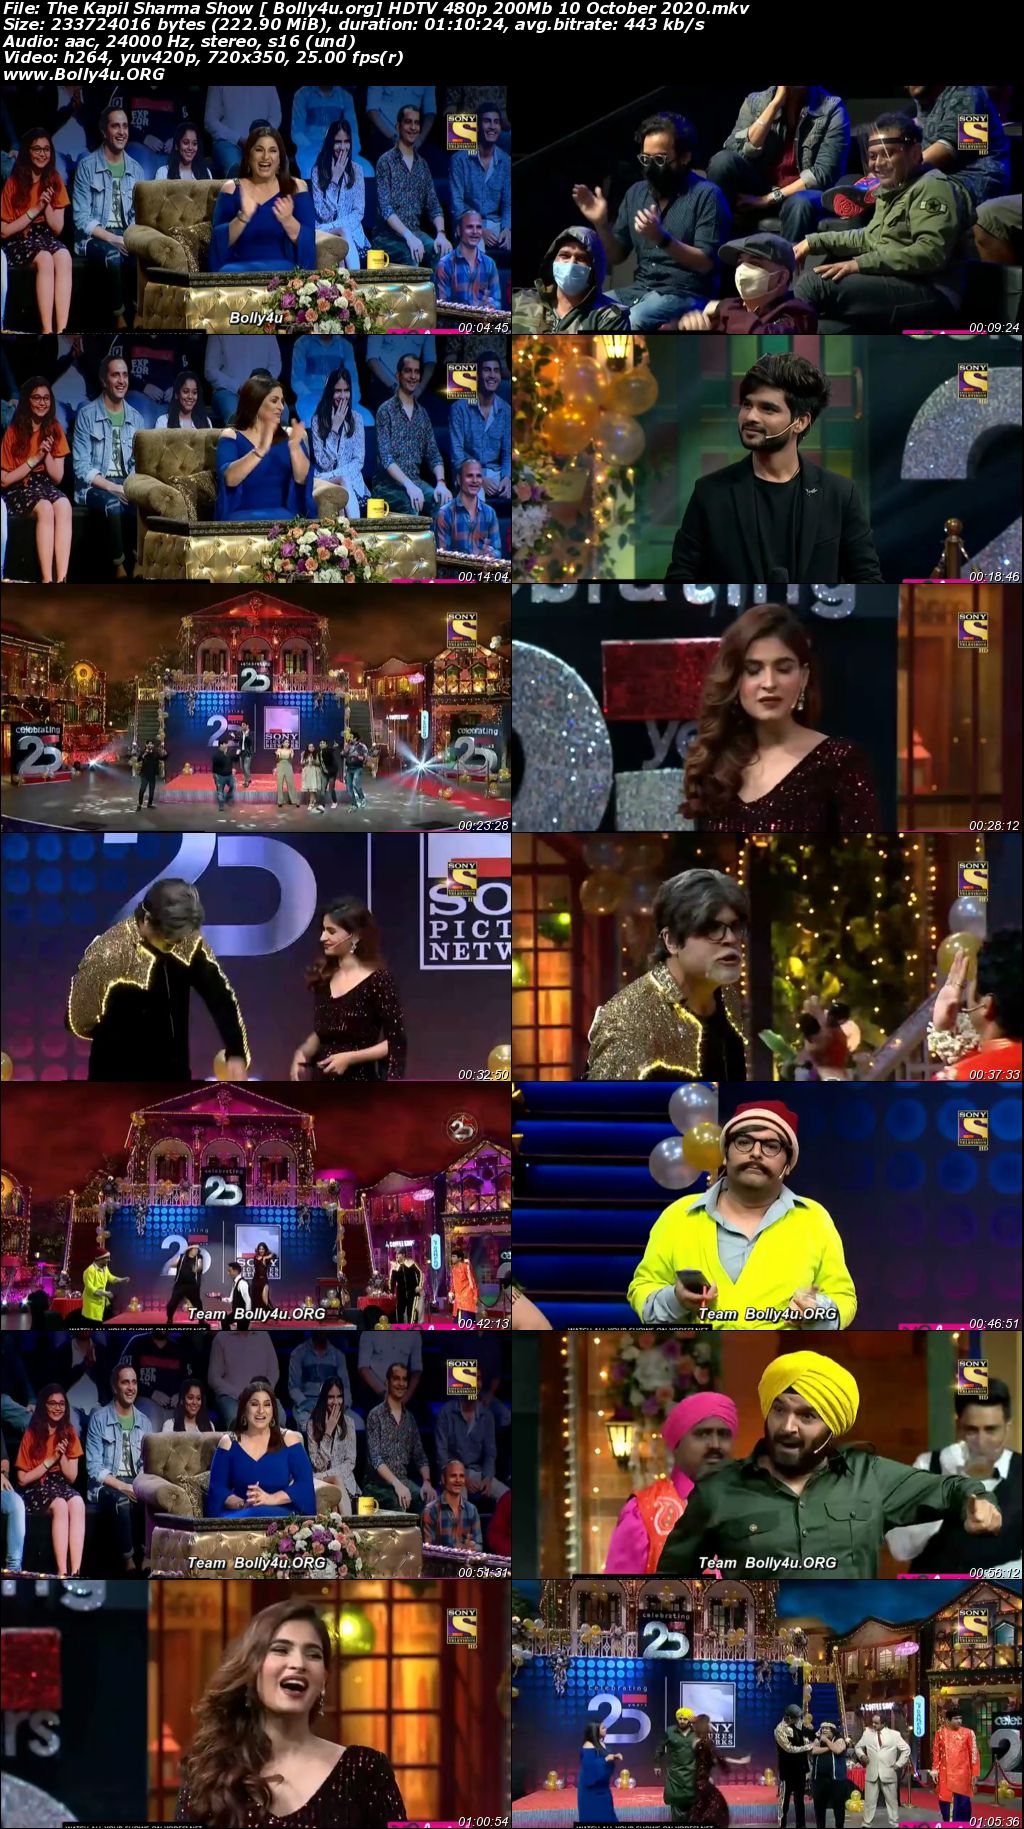 The Kapil Sharma Show HDTV 480p 200Mb 10 October 2020 Download